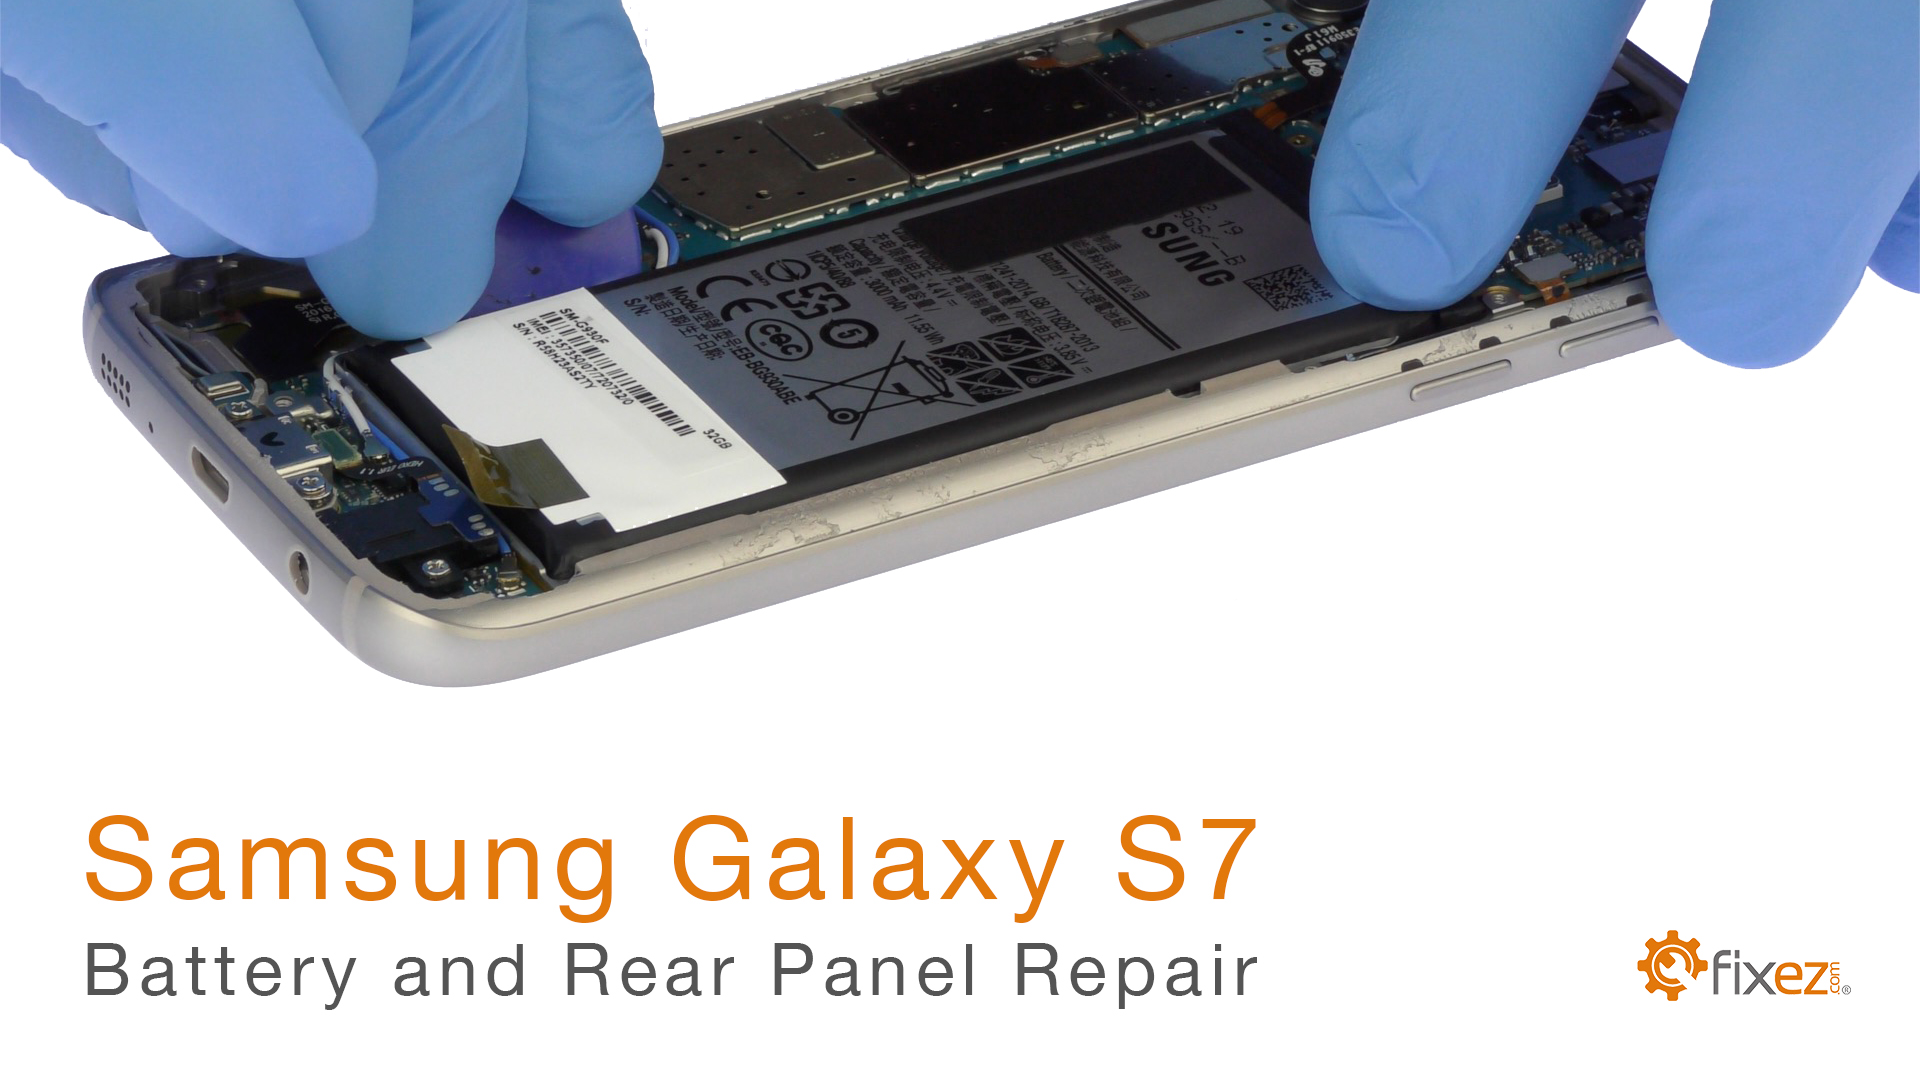 Samsung Galaxy S7 Battery and Rear Panel Repair